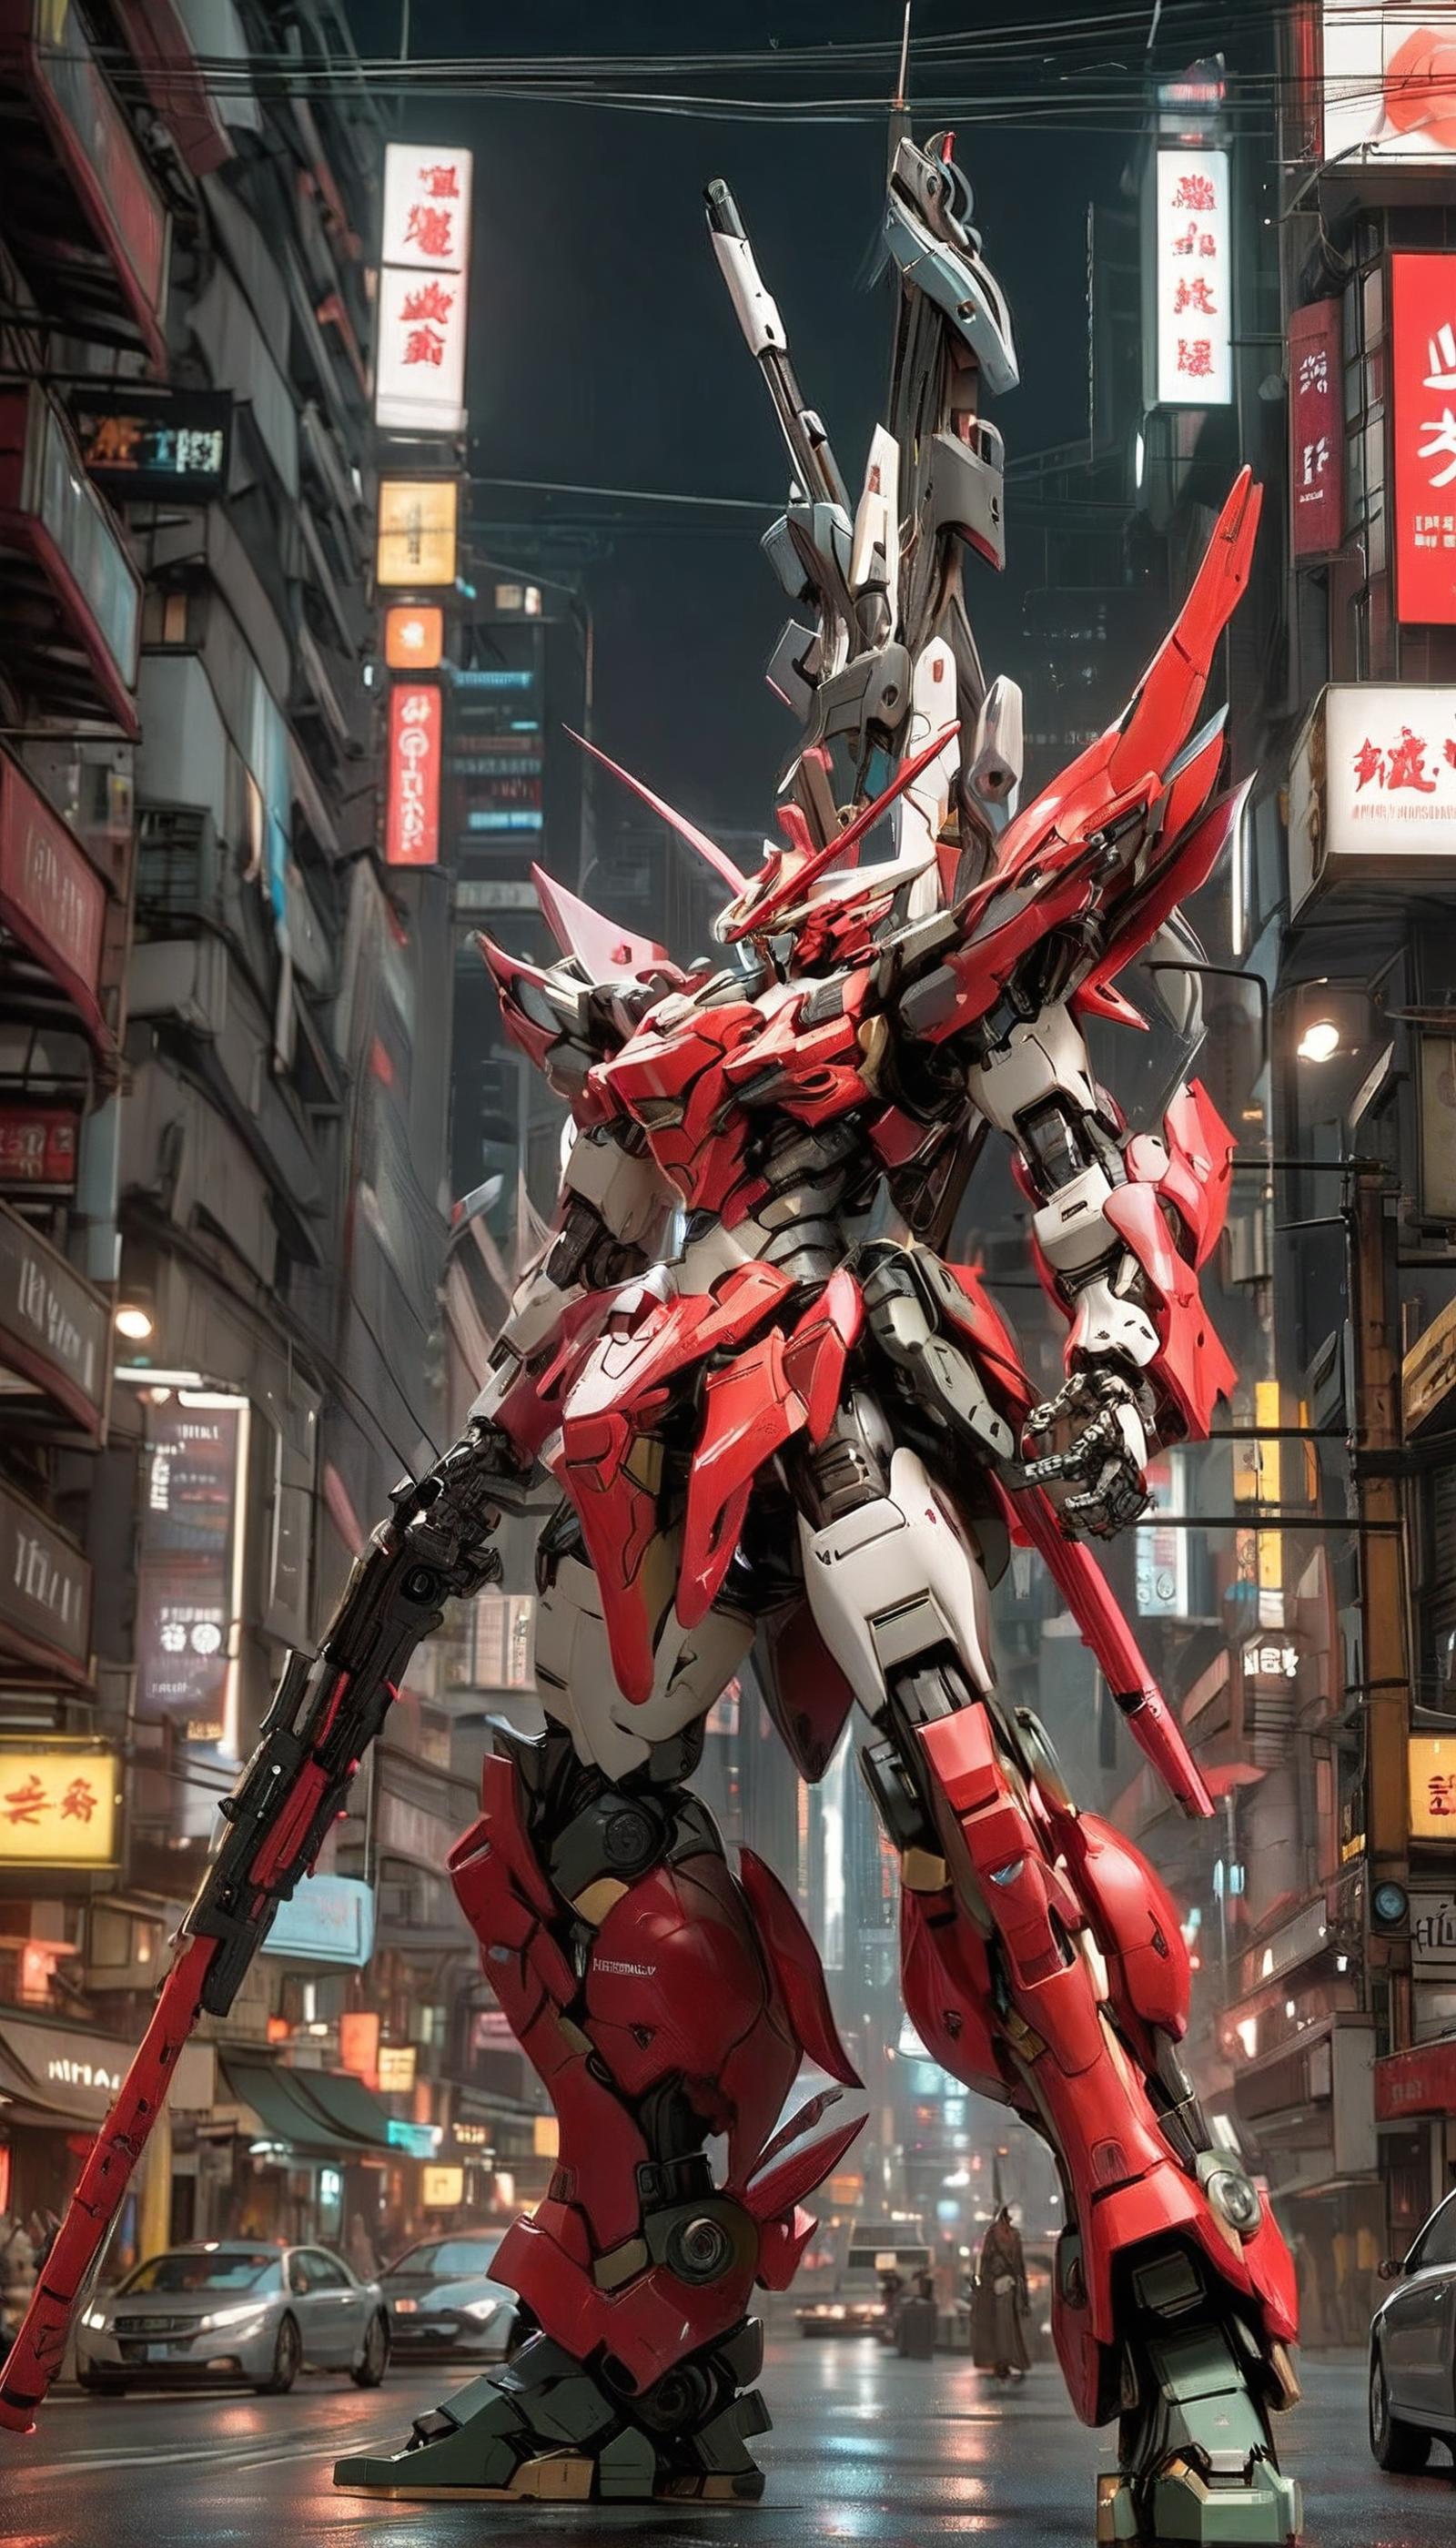 Super robot diffusion XL (Gundam, EVA, ARMORED CORE, BATTLE TECH like mecha lora) image by Alfy